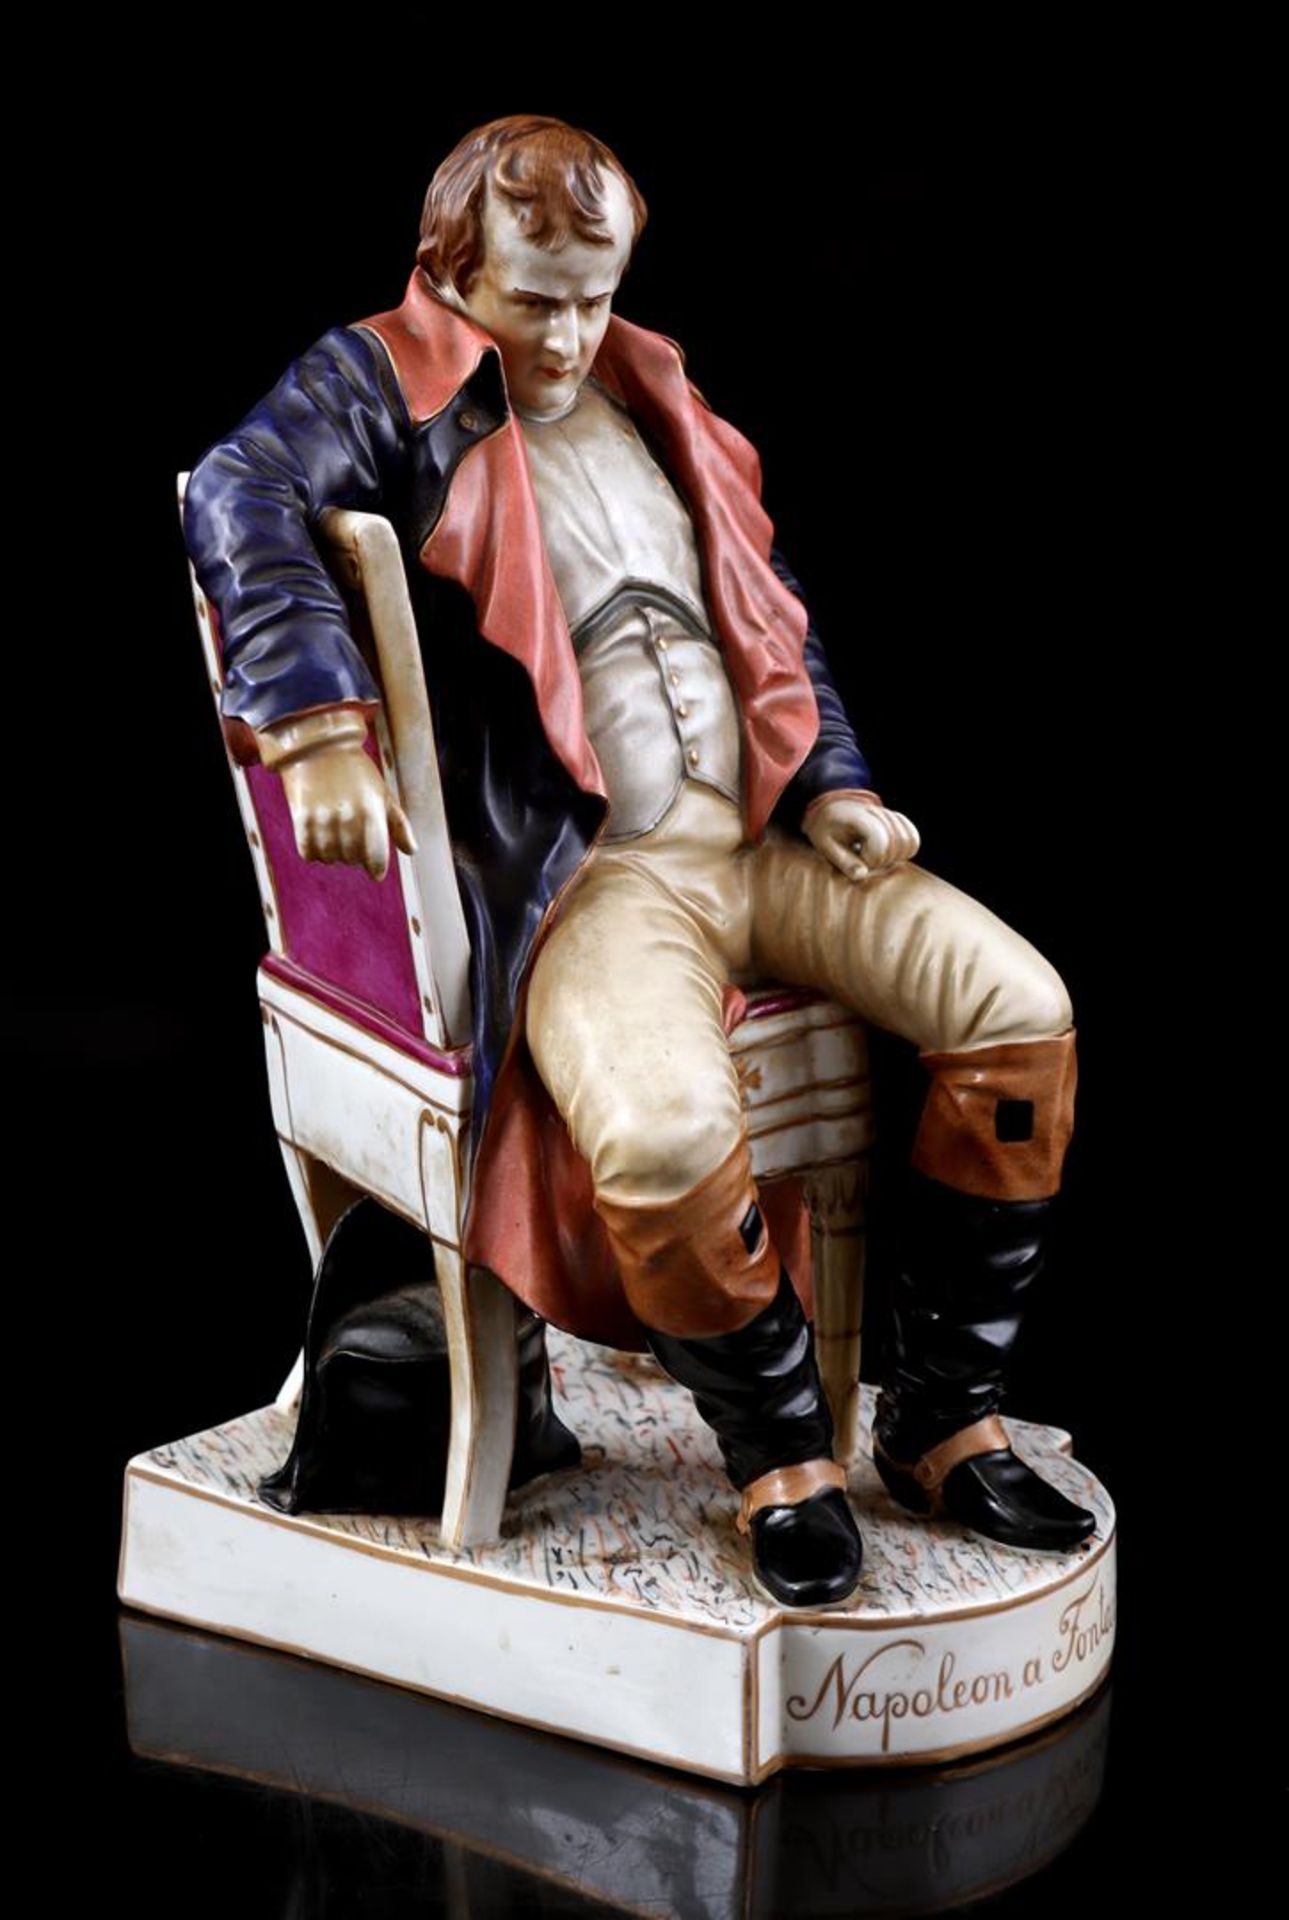 Porcelain statue of Napoleon